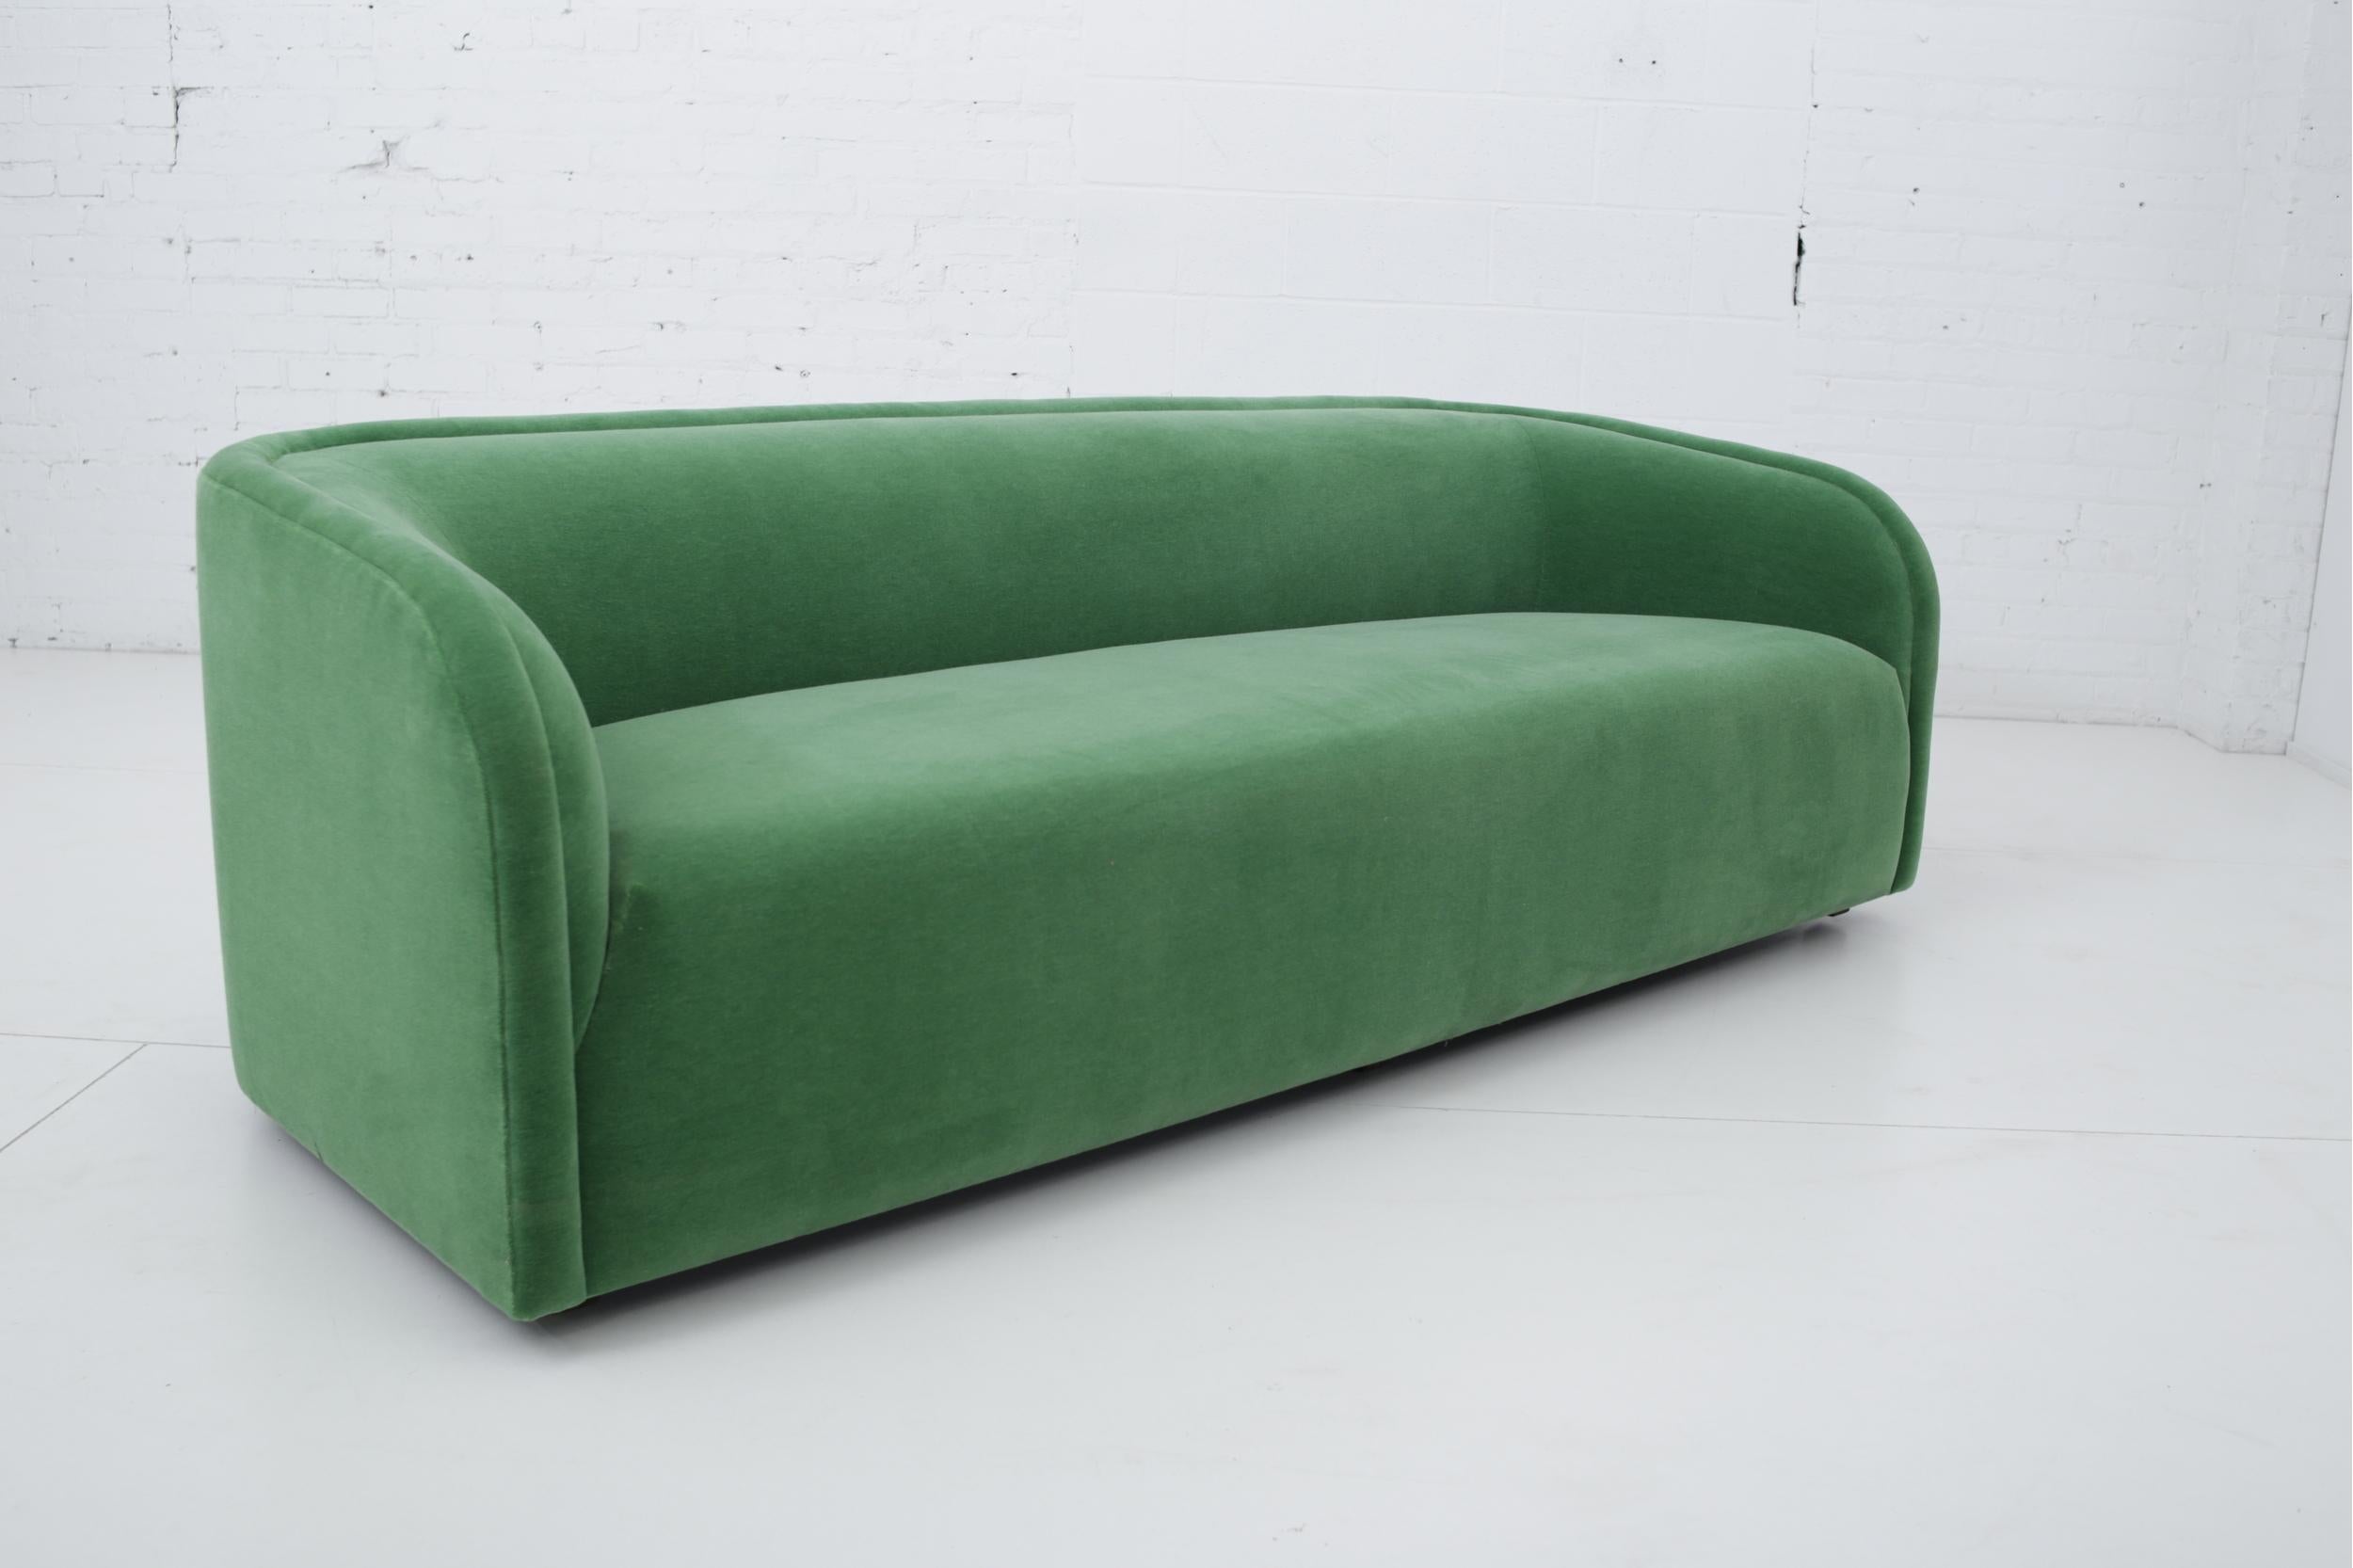 Fully restored 1980s Postmodern sofa. Reupholstered in green mohair.